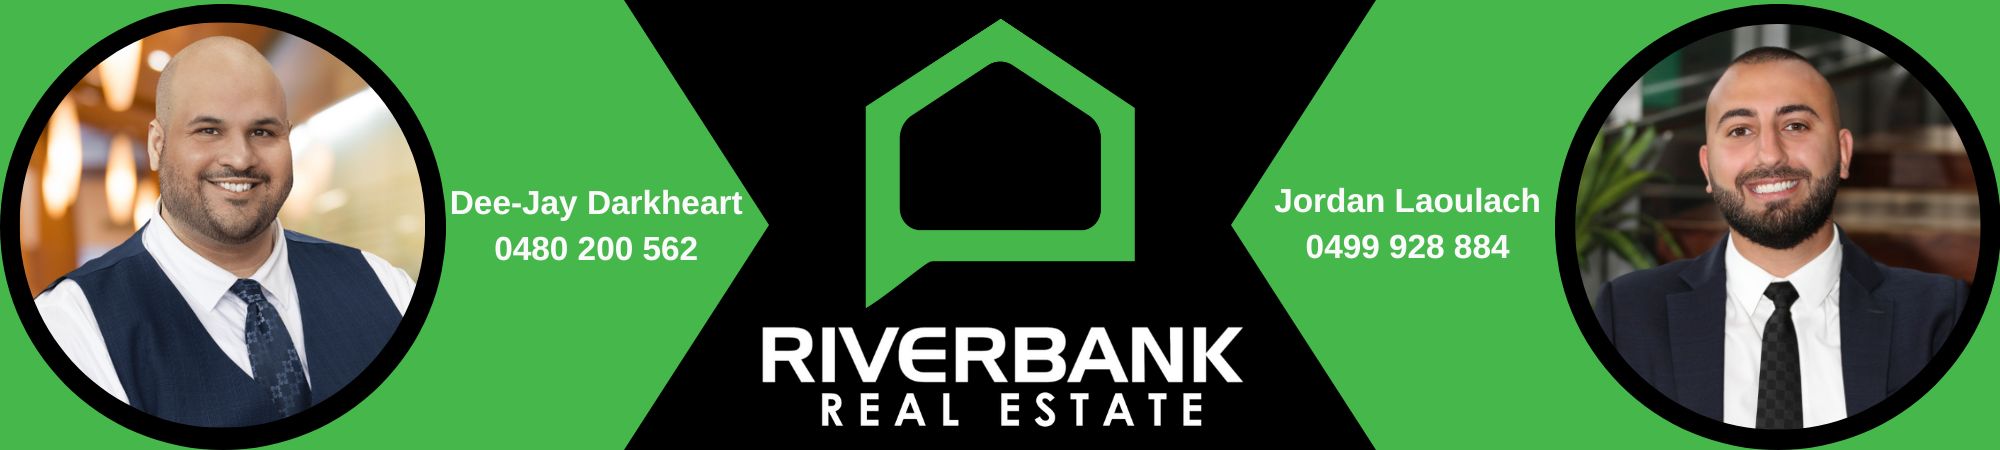 Guildford Leagues Club sponsor: Riverbank Real Estate 